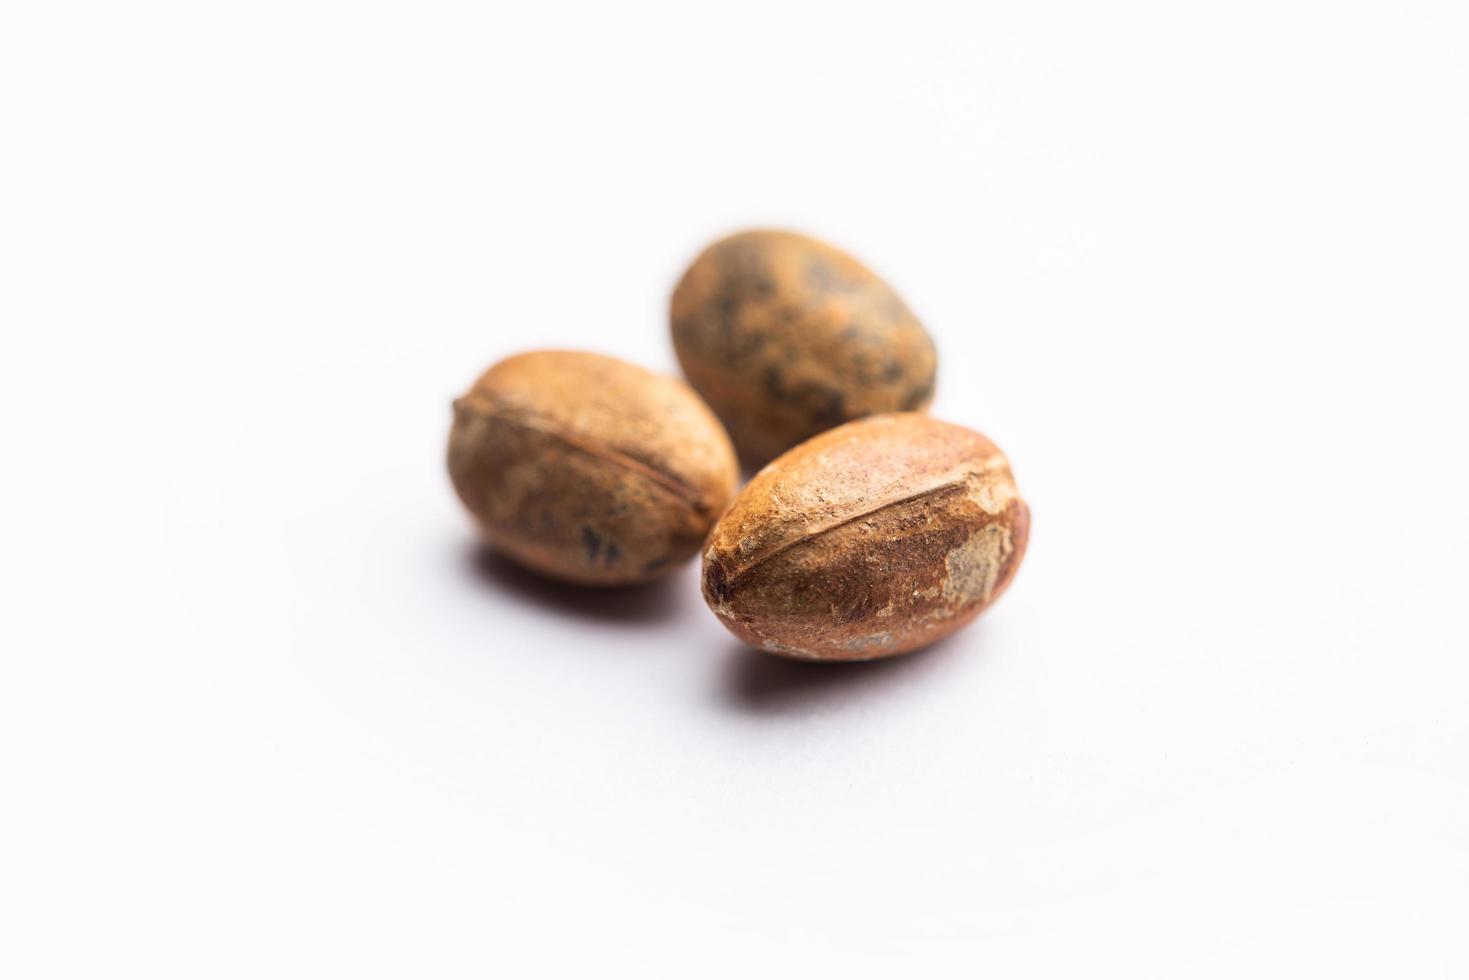 jamalgota o jayapala - croton tiglio seme è un ayurvedico medicina anche conosciuto come spurgo croton foto